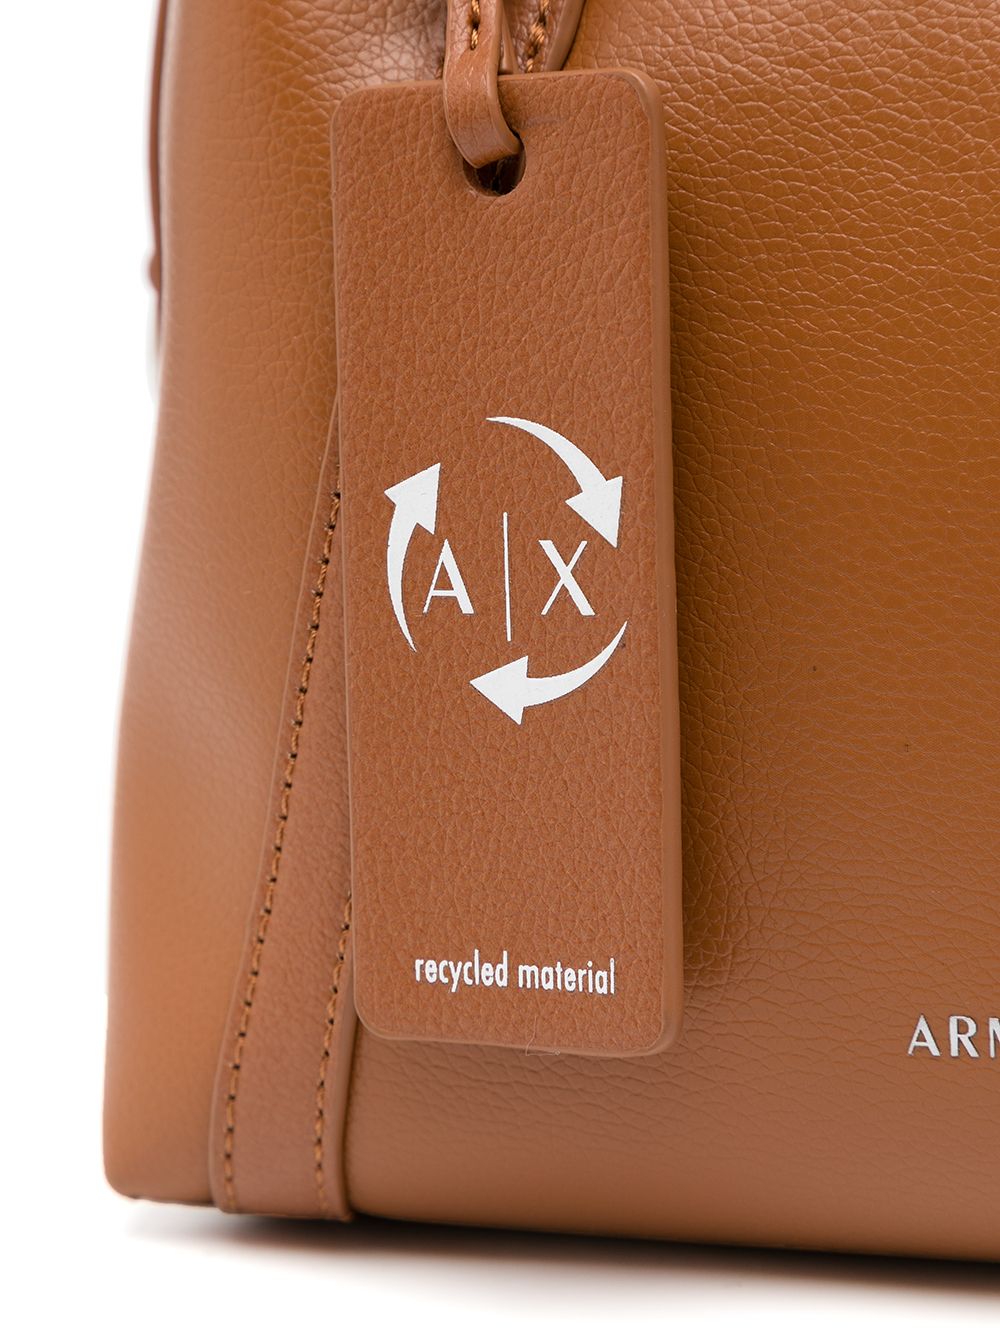 фото Armani exchange сумка-тоут с тисненым логотипом